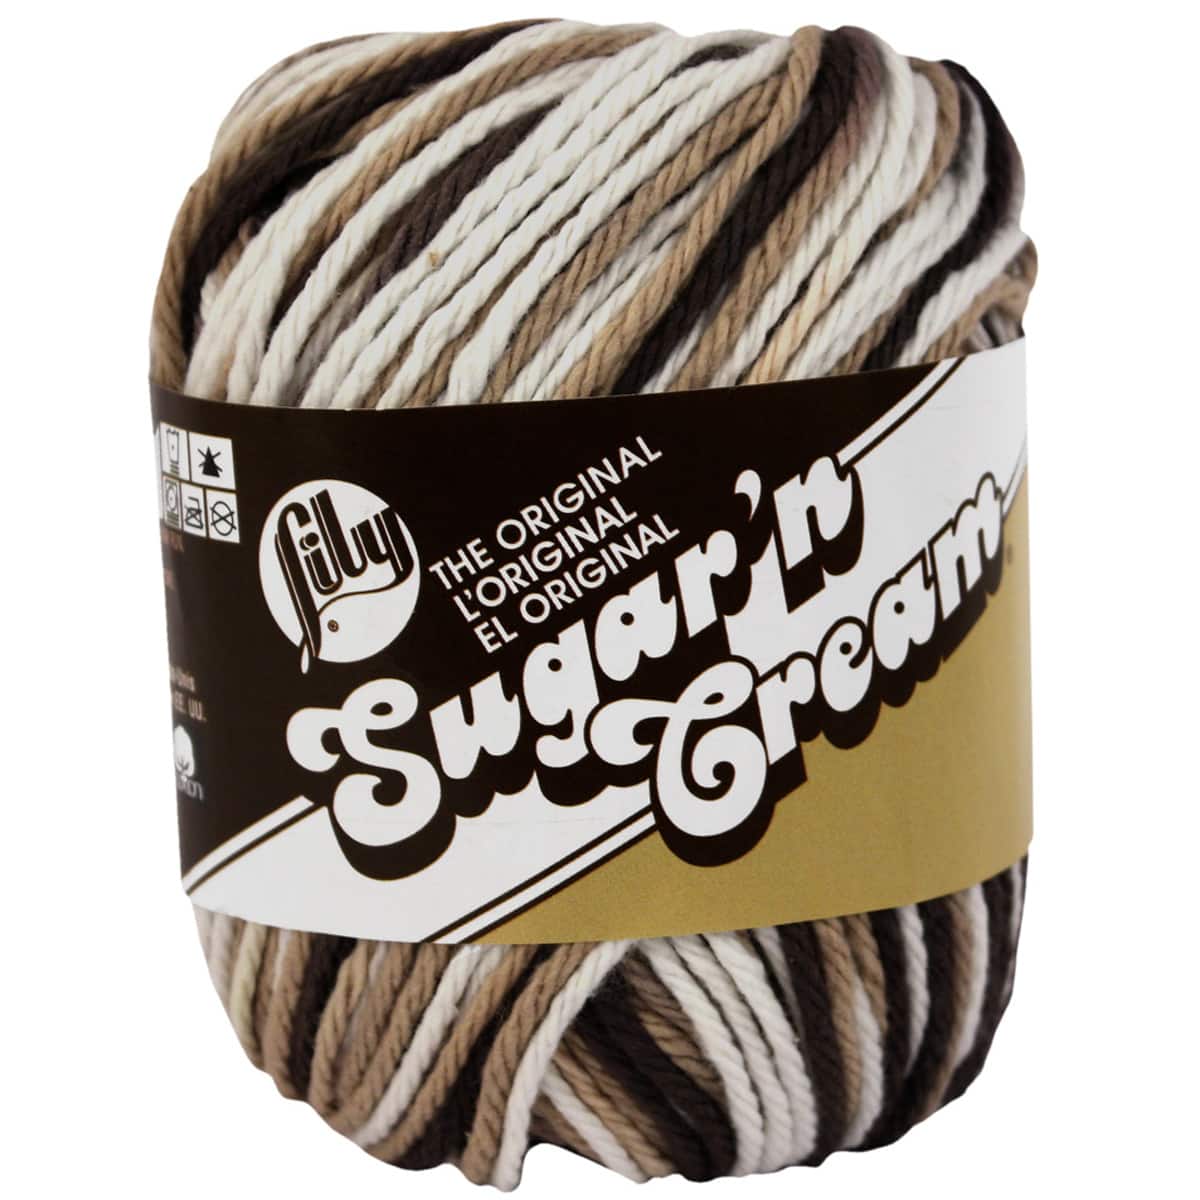 Lily Sugar'n Cream Yarn - Solids Super Size-Cornflower, 1 count - Ralphs